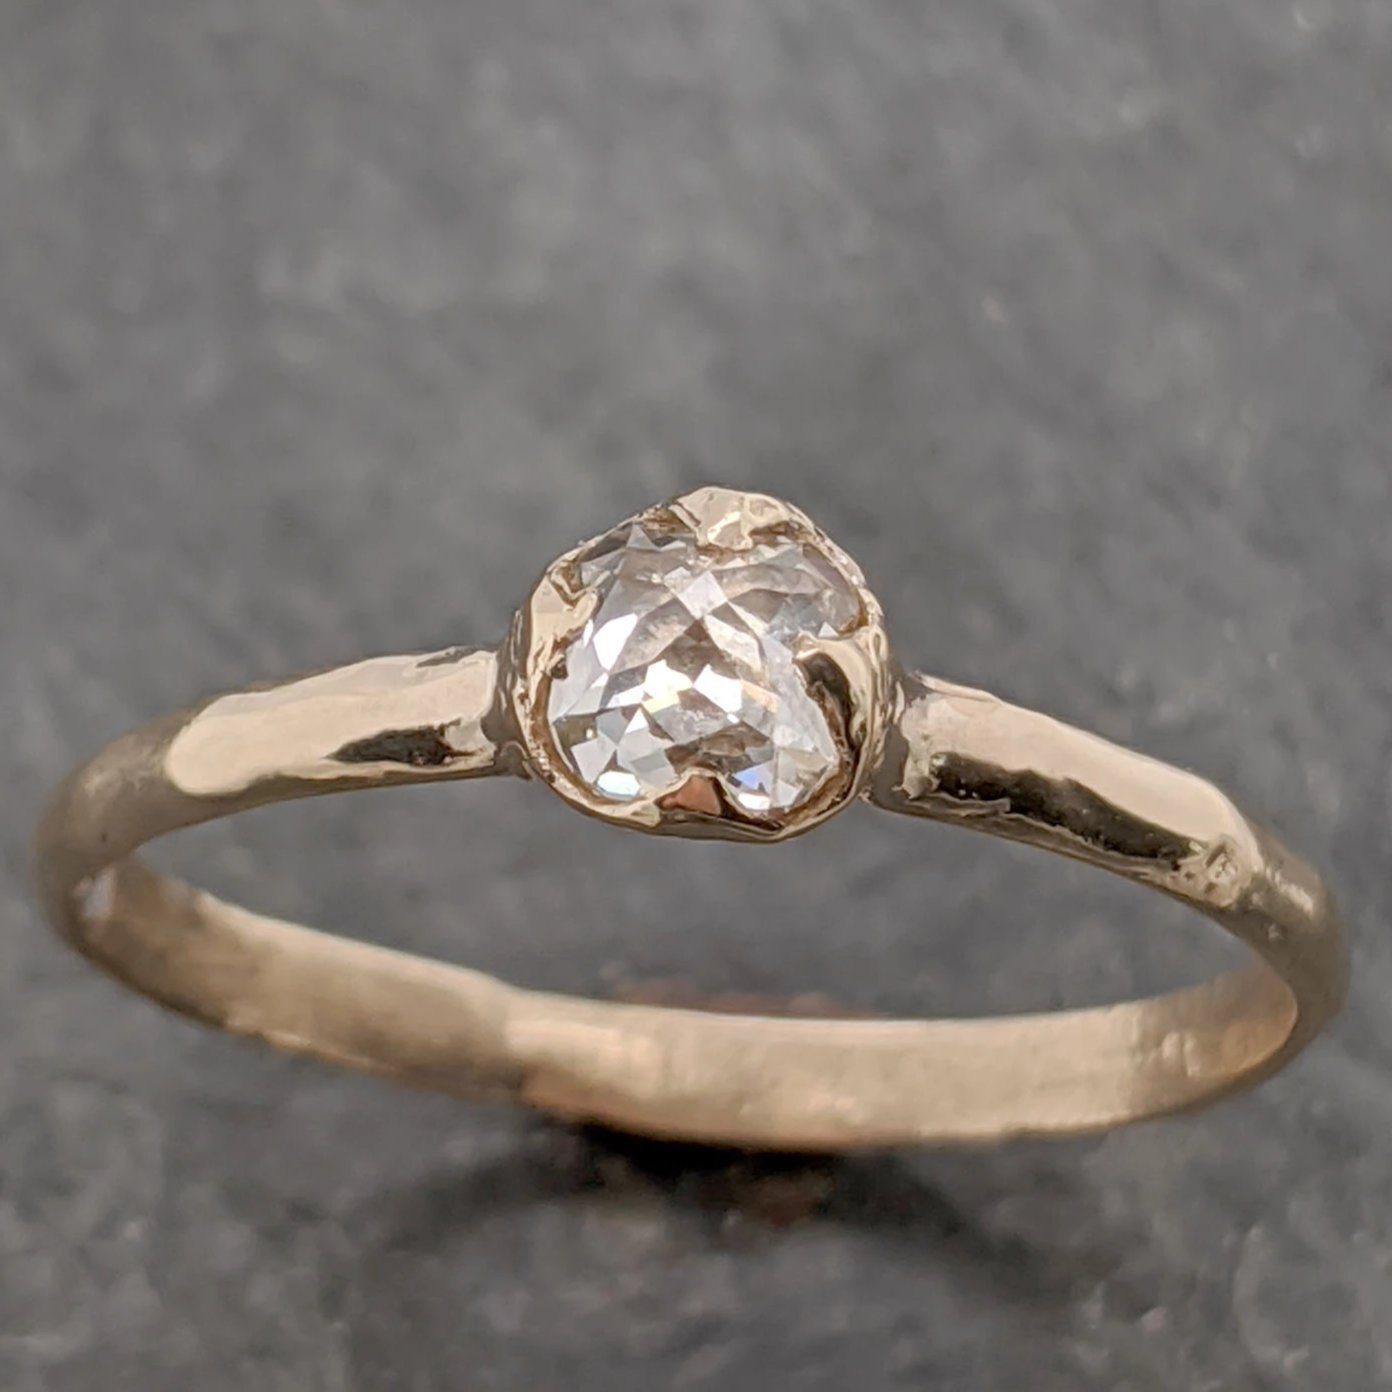 fancy cut white diamond solitaire engagement 14k yellow gold wedding ring byangeline 2081 Alternative Engagement